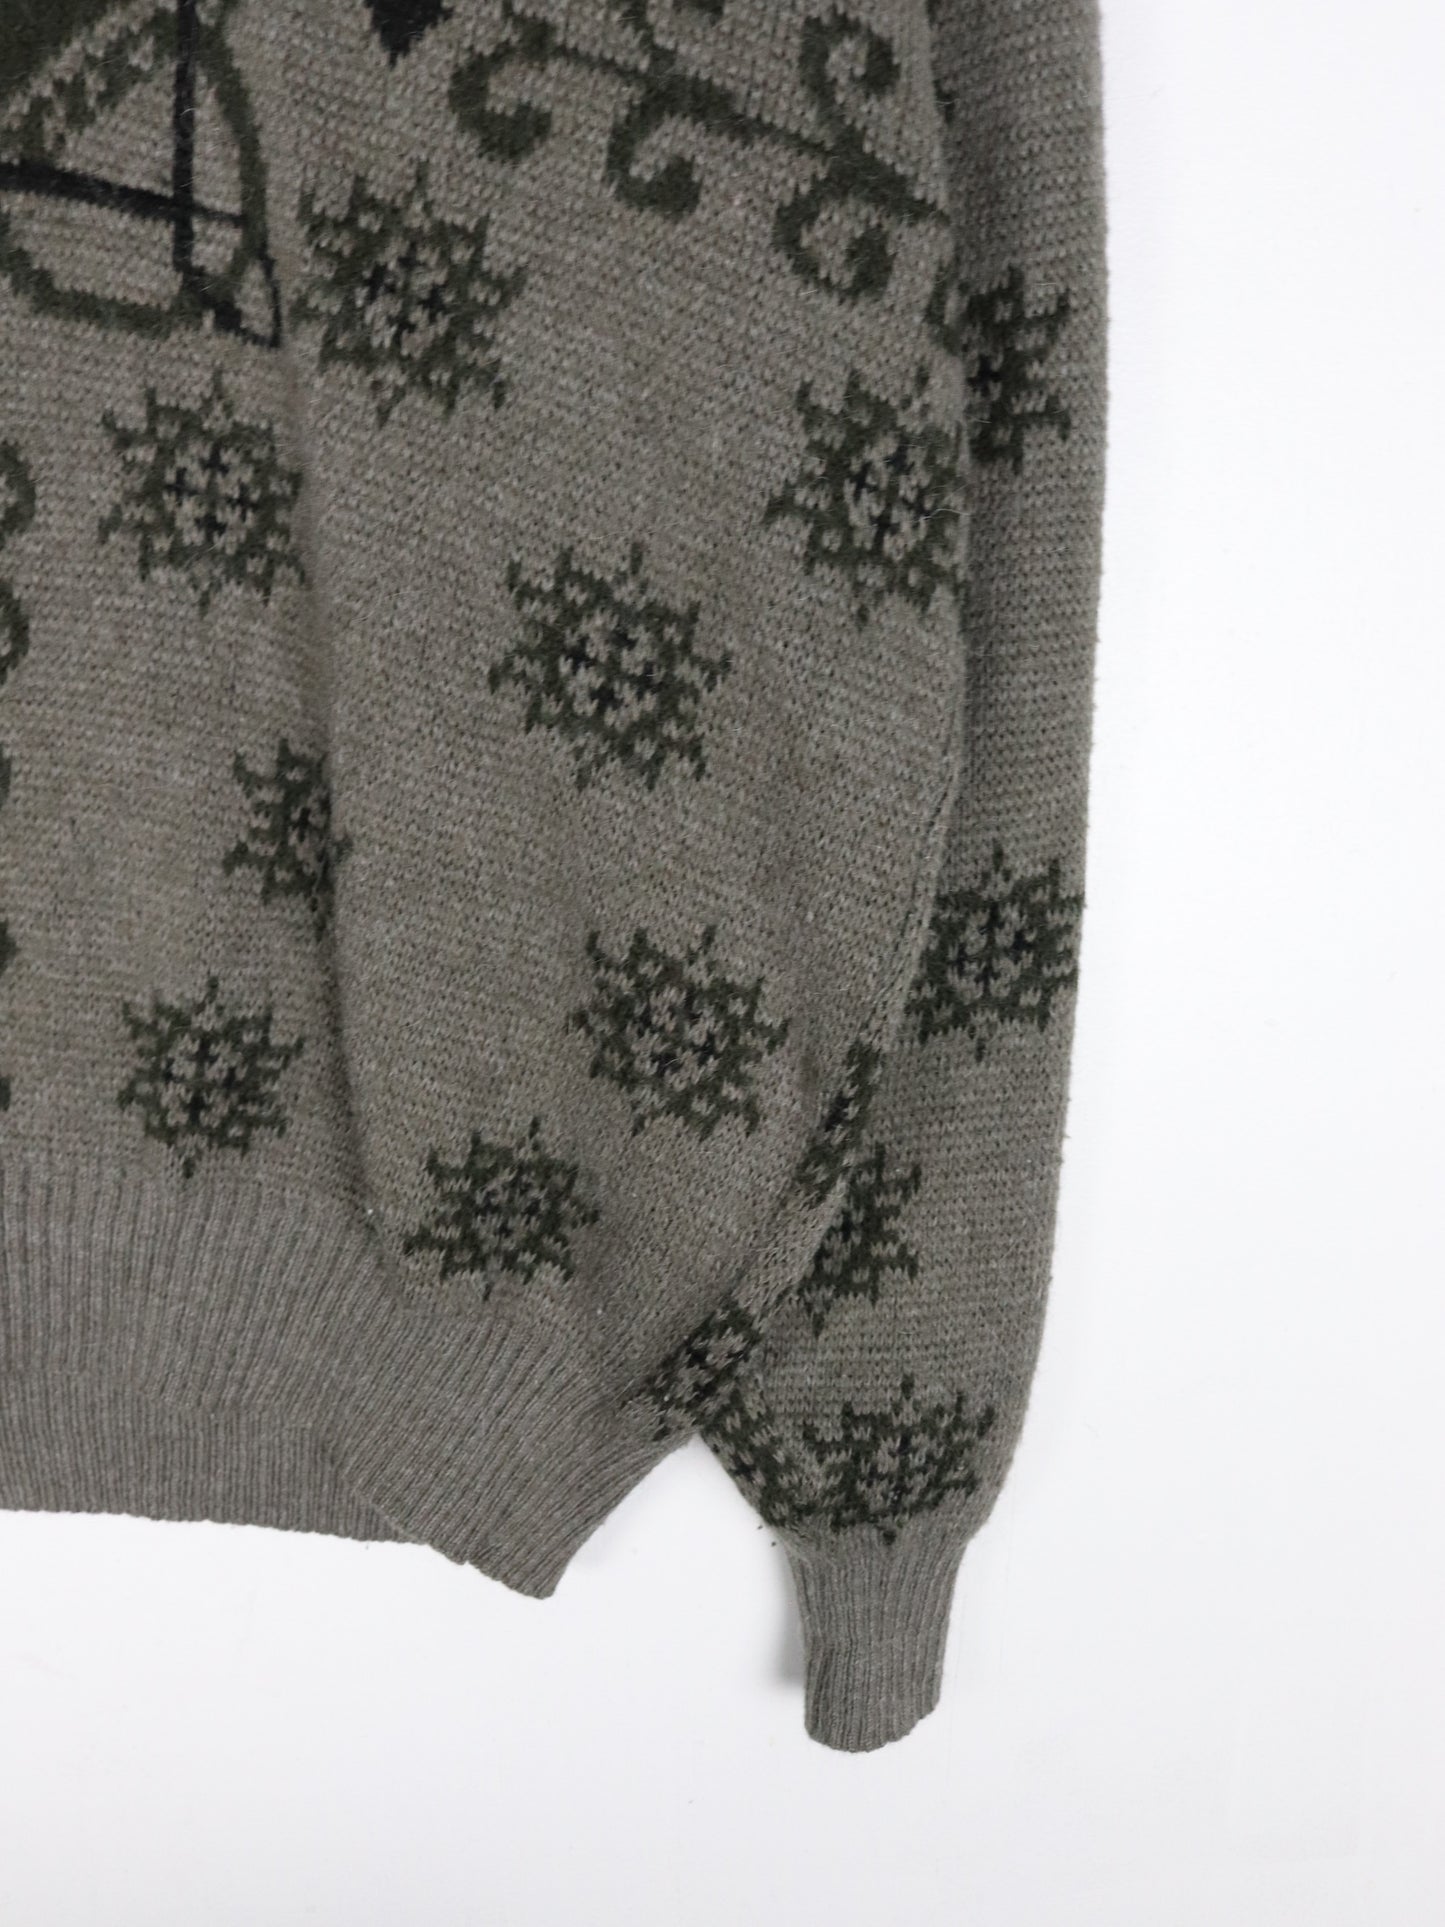 Vintage Lasa Sweater Mens Medium Collar Knit Wool Blend